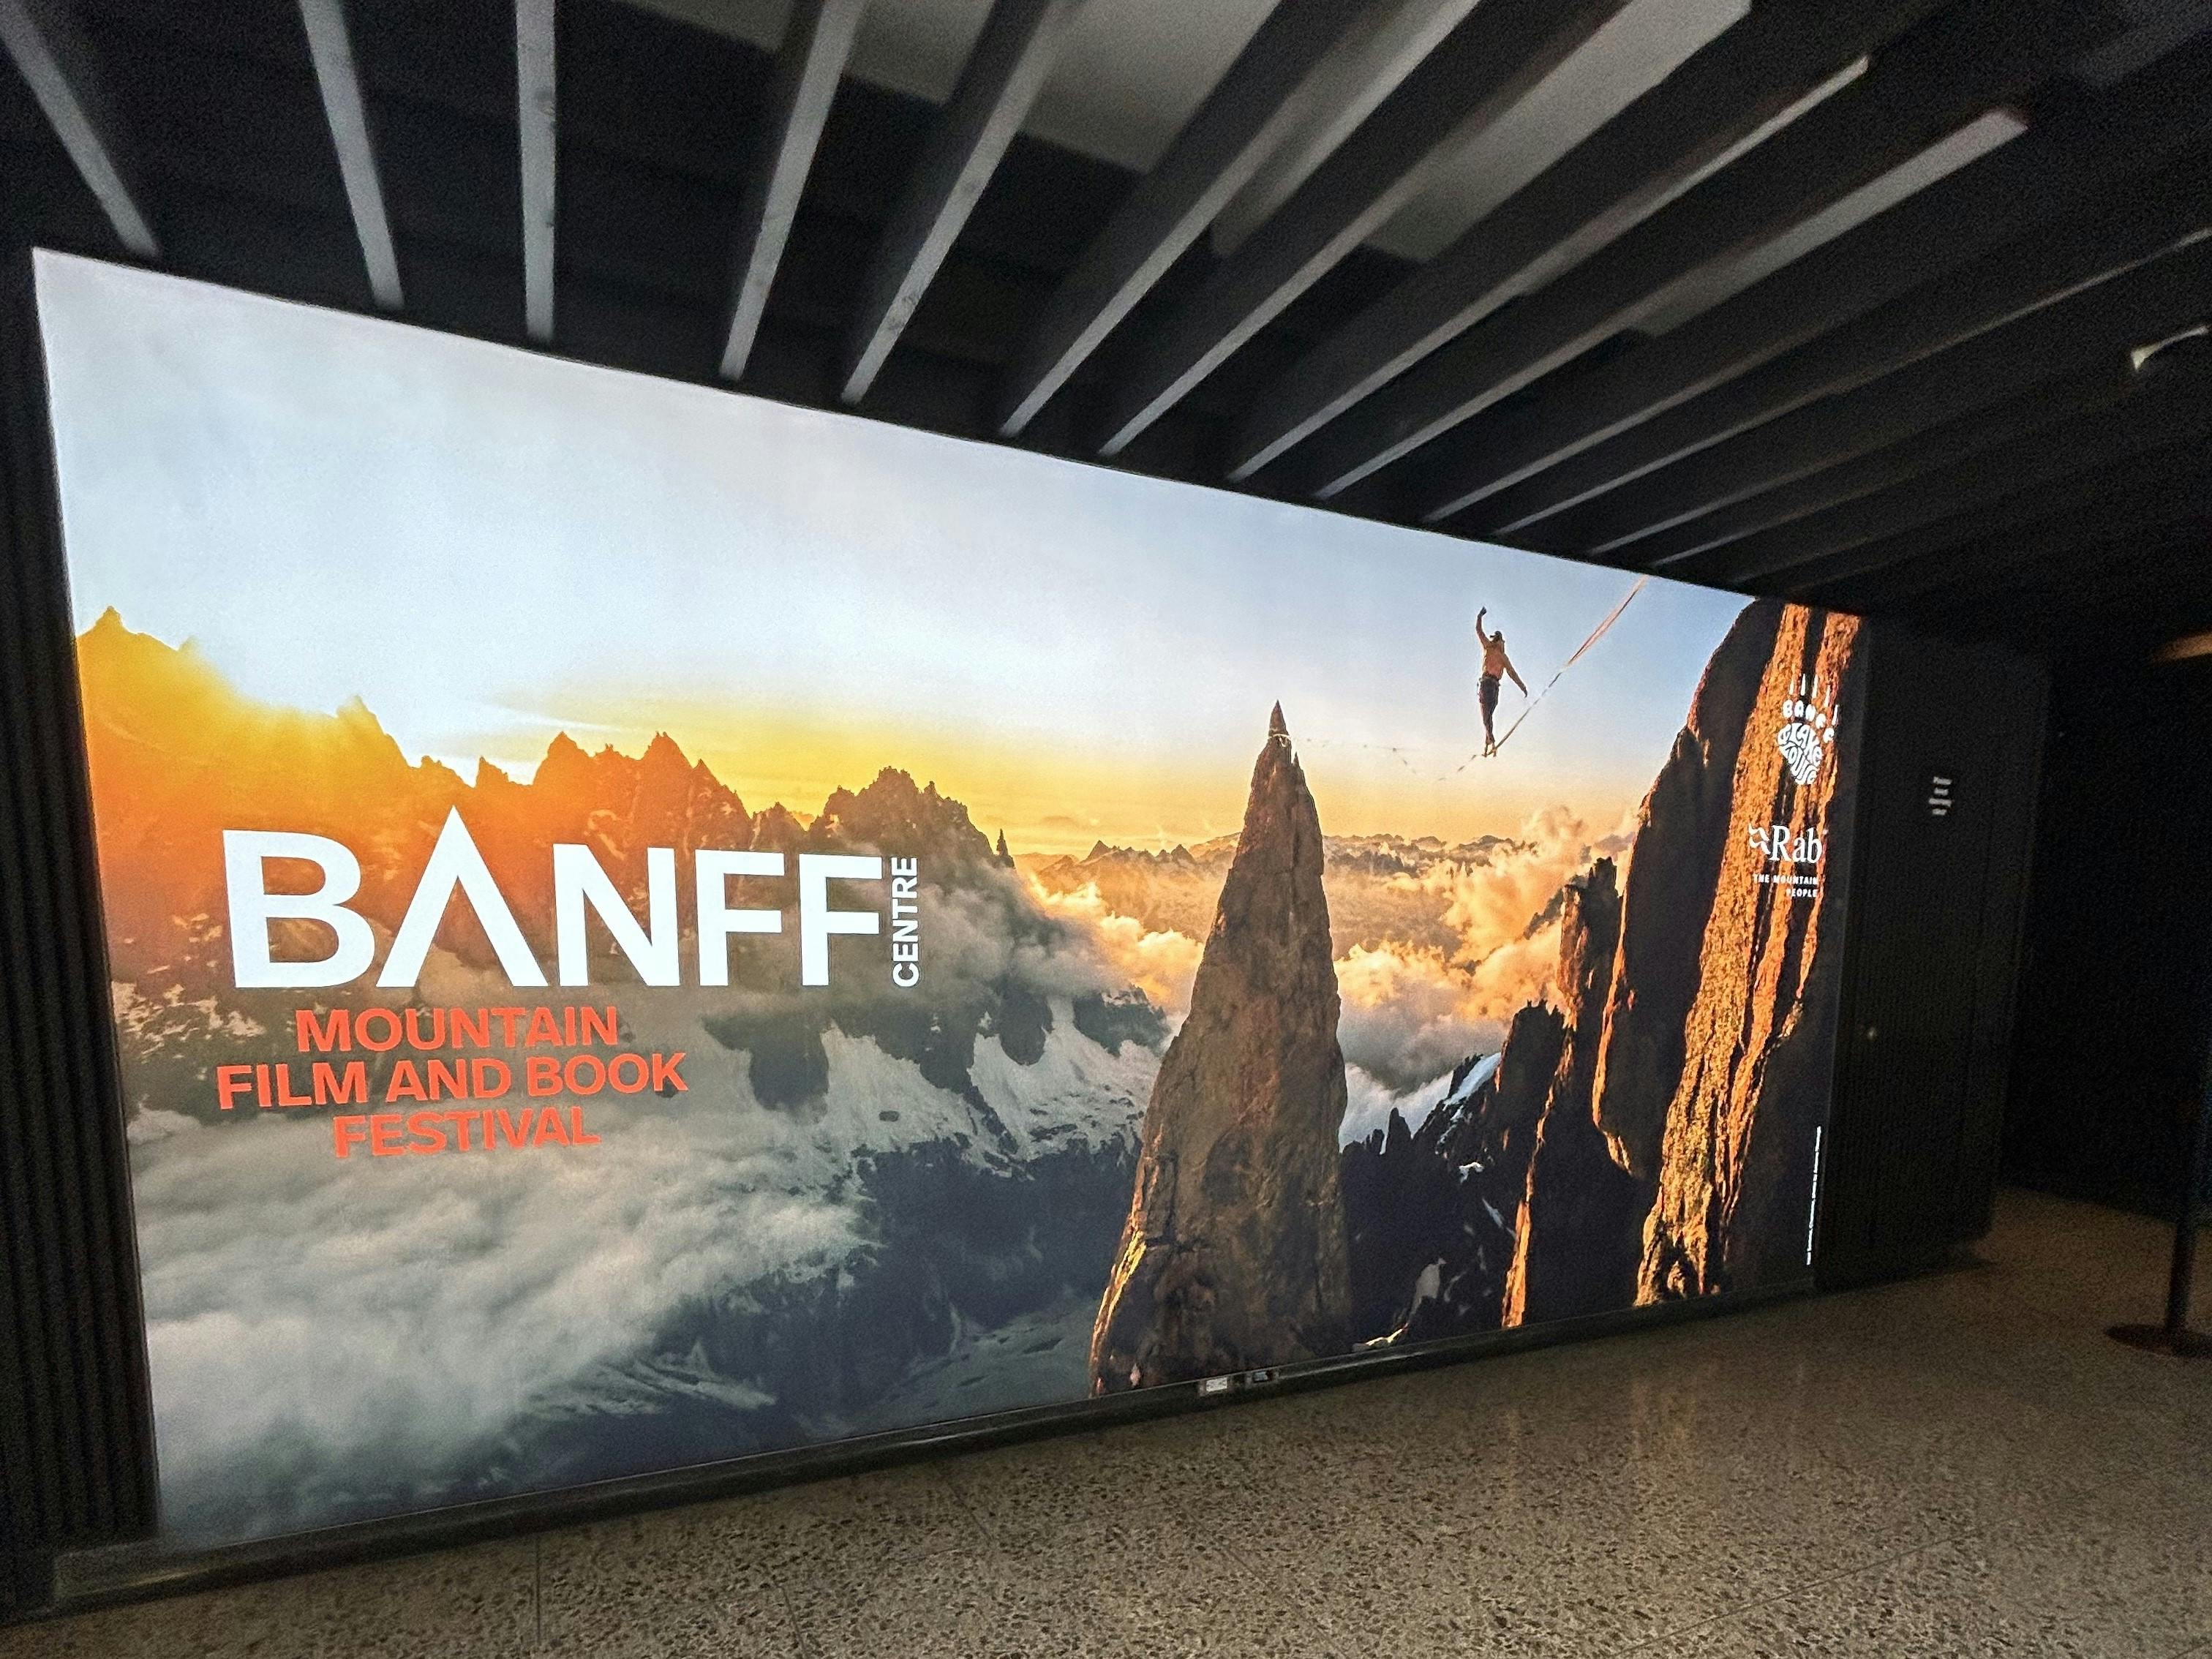 BIMFF sign - Banff